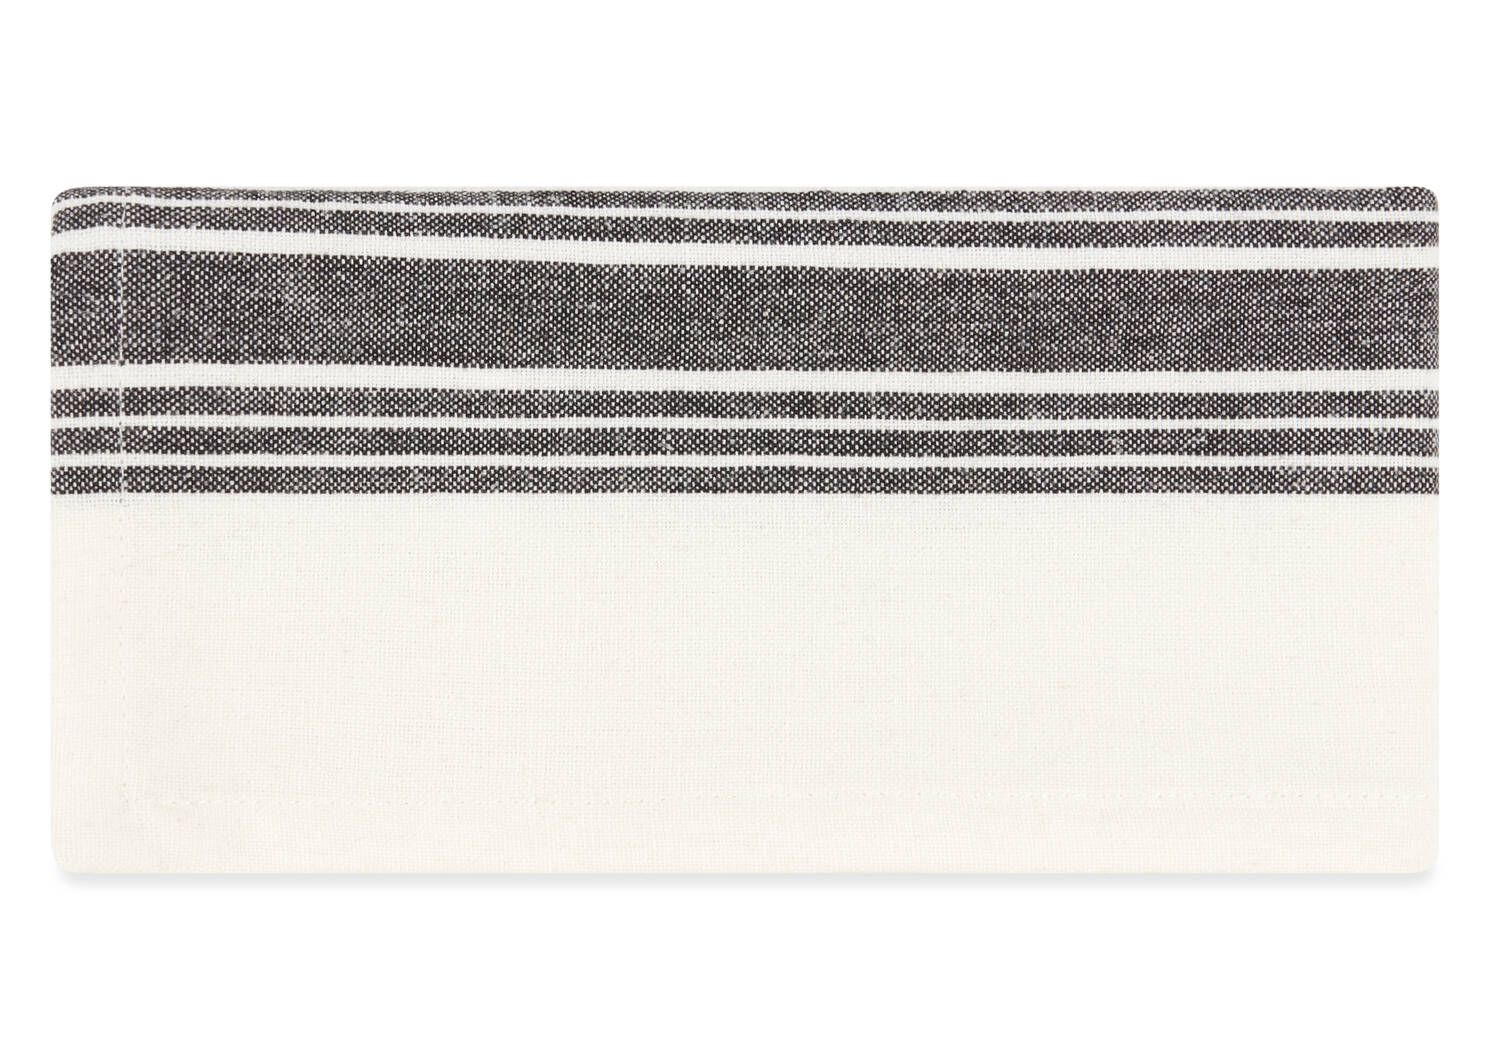 Colette Stripe Cotton Napkin Set of 4